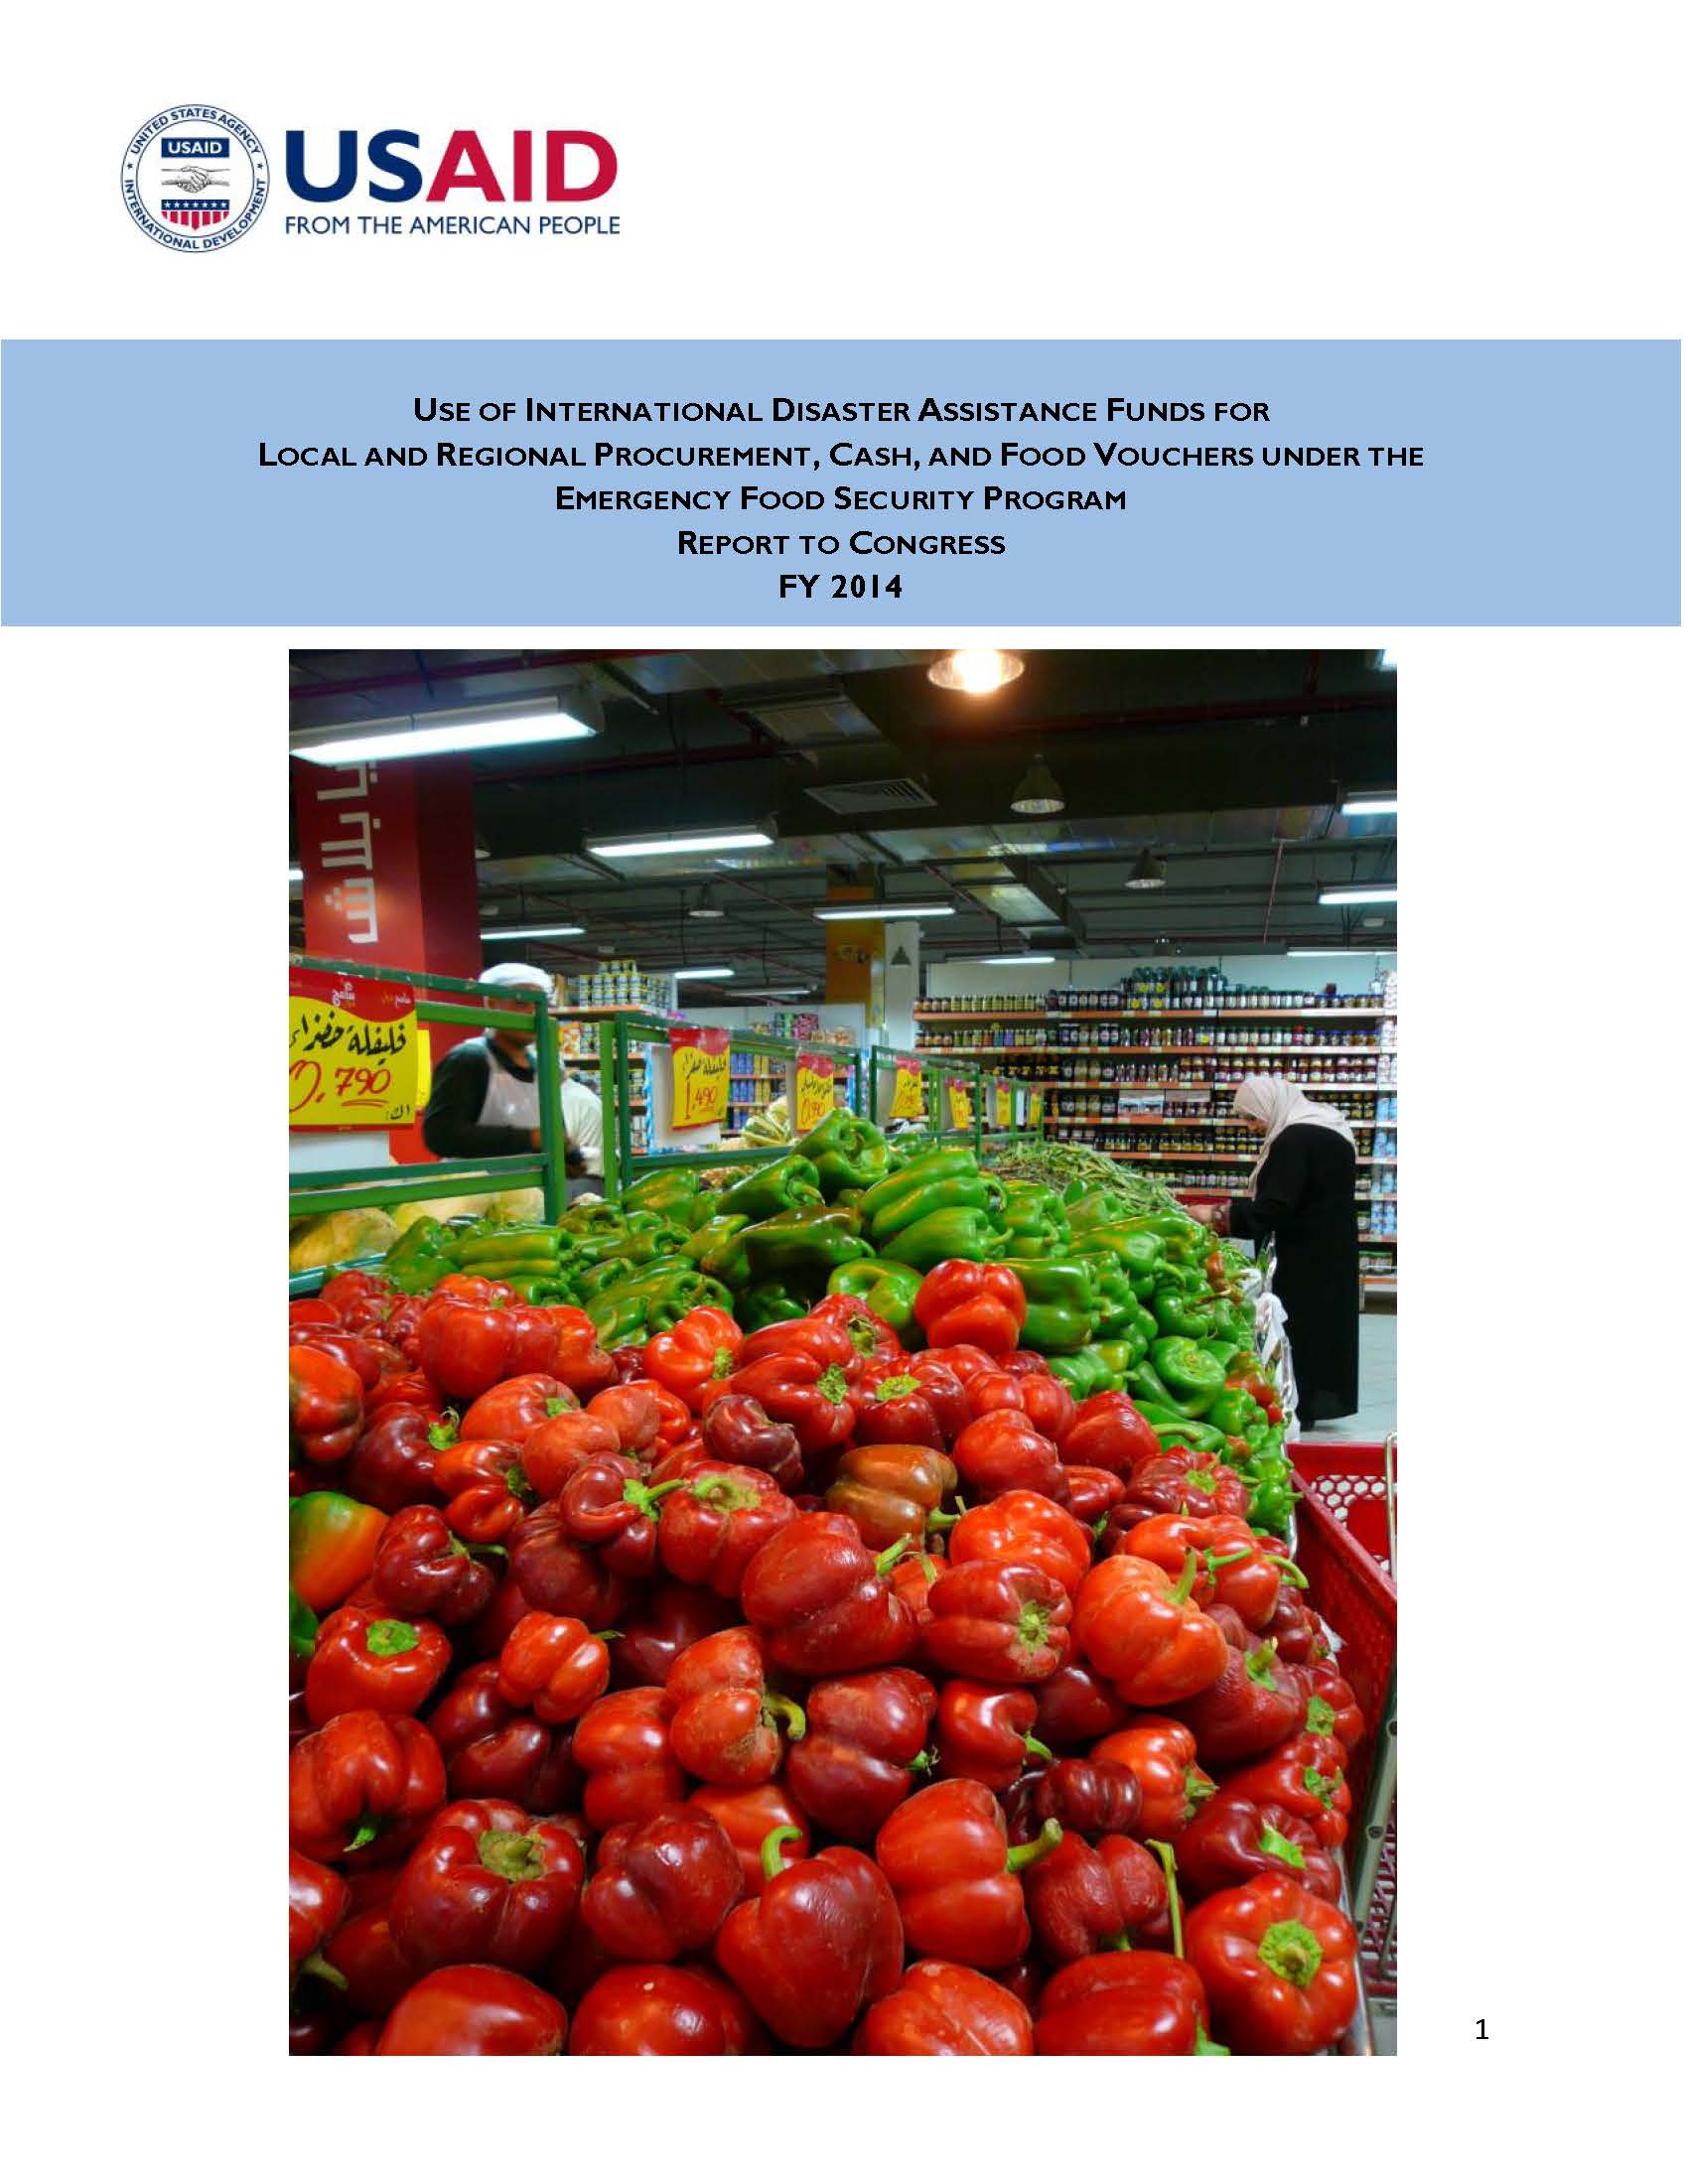 FY 2014 Emergency Food Security Program Report to Congress